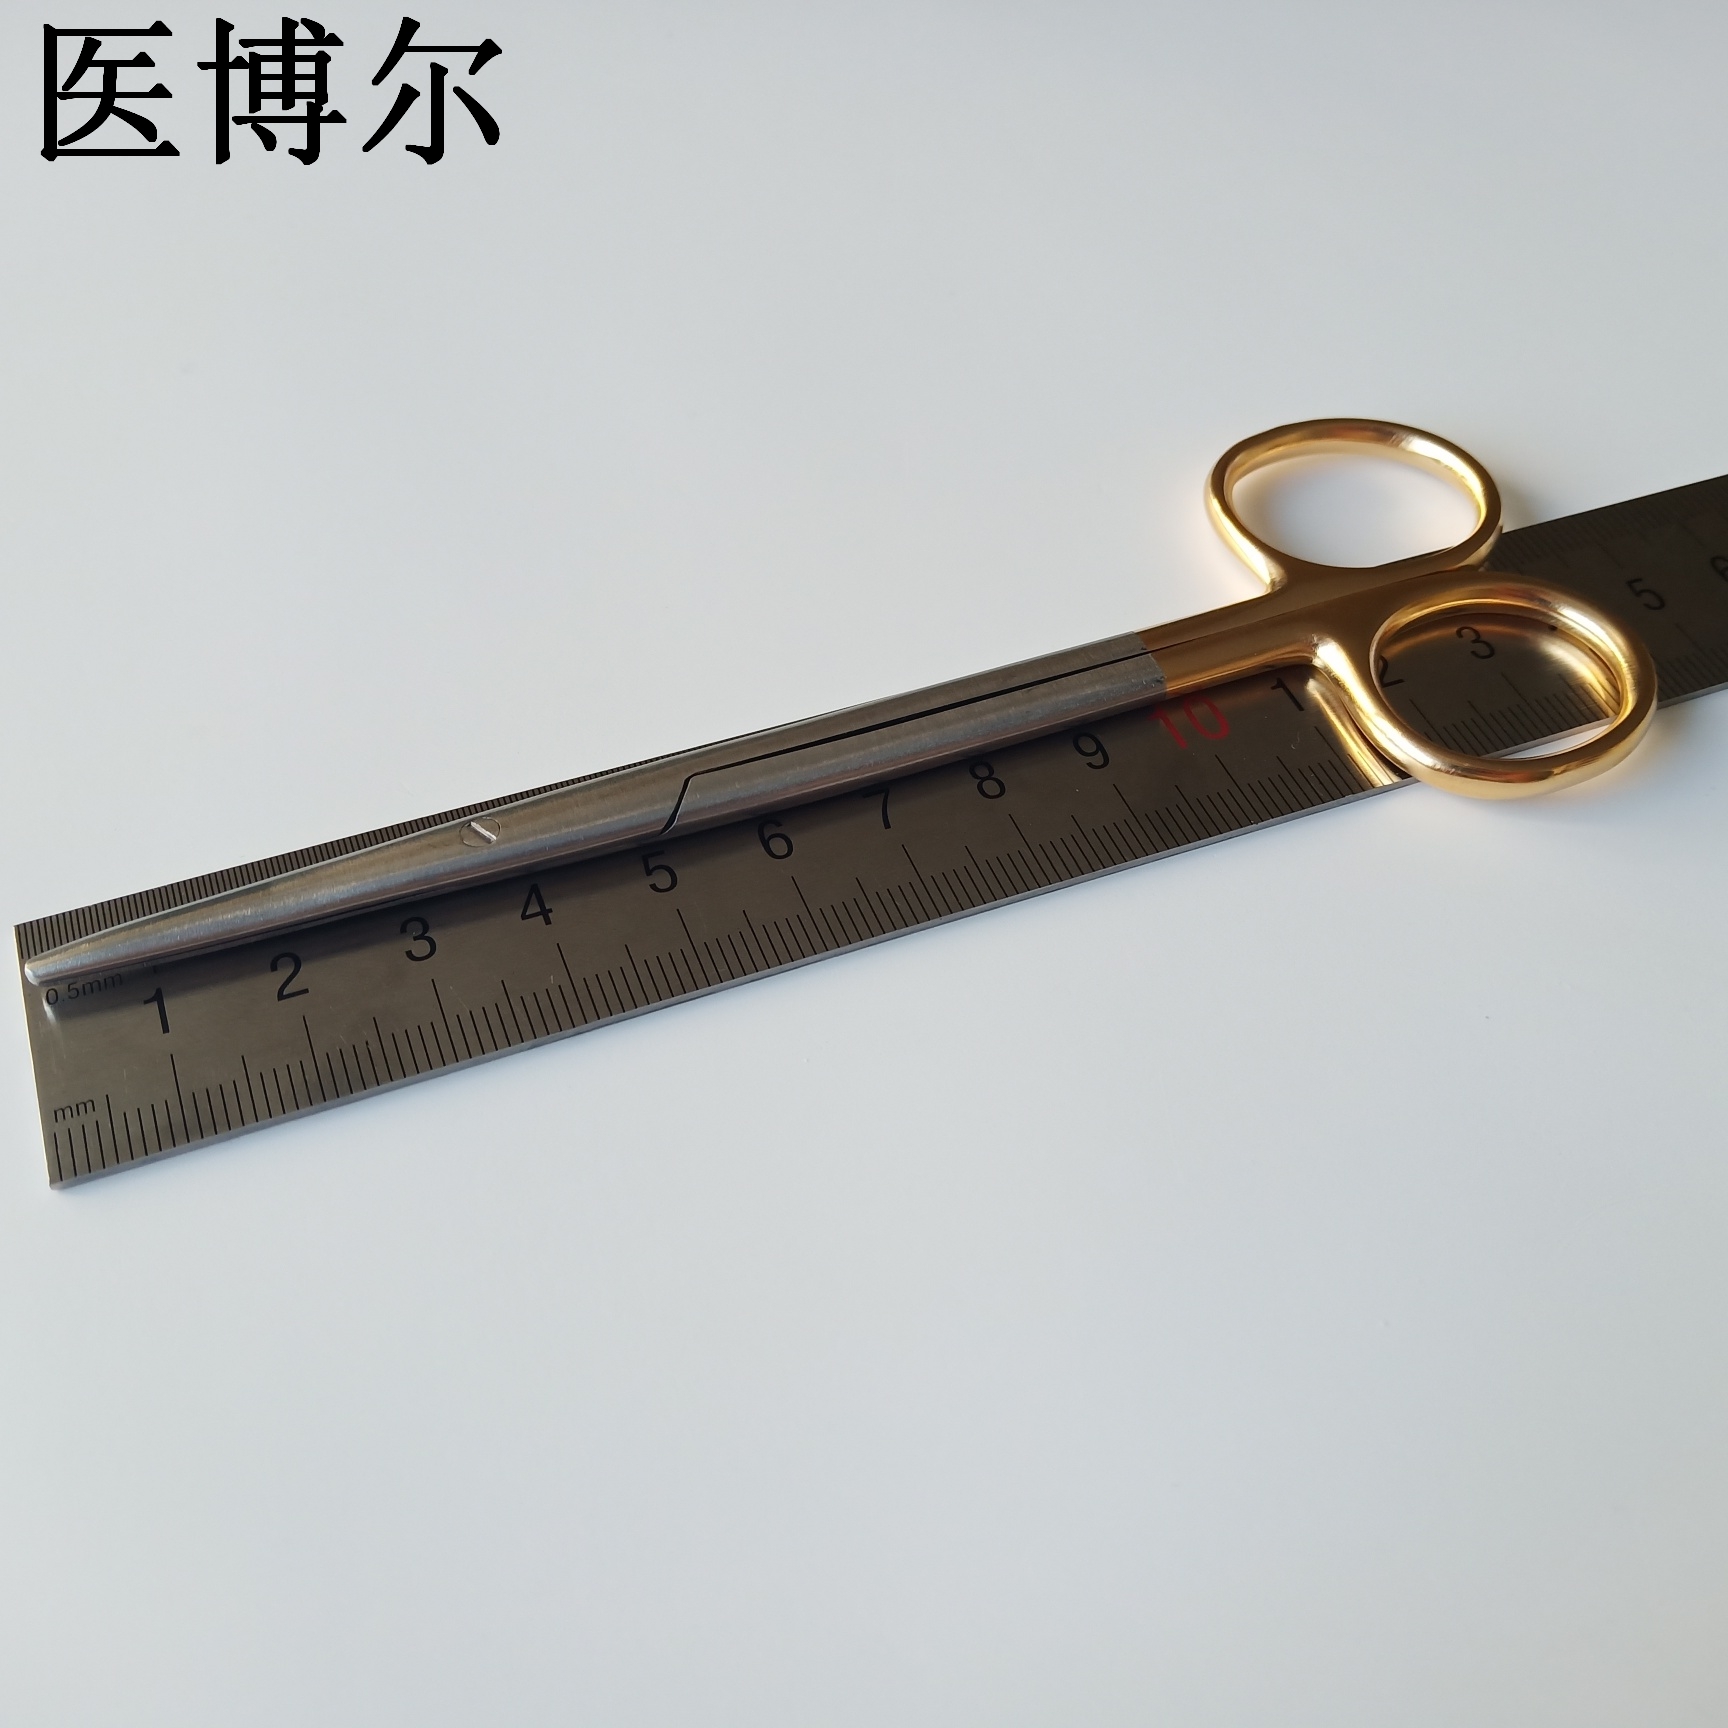 14cm精细直圆剪刀 (8).jpg